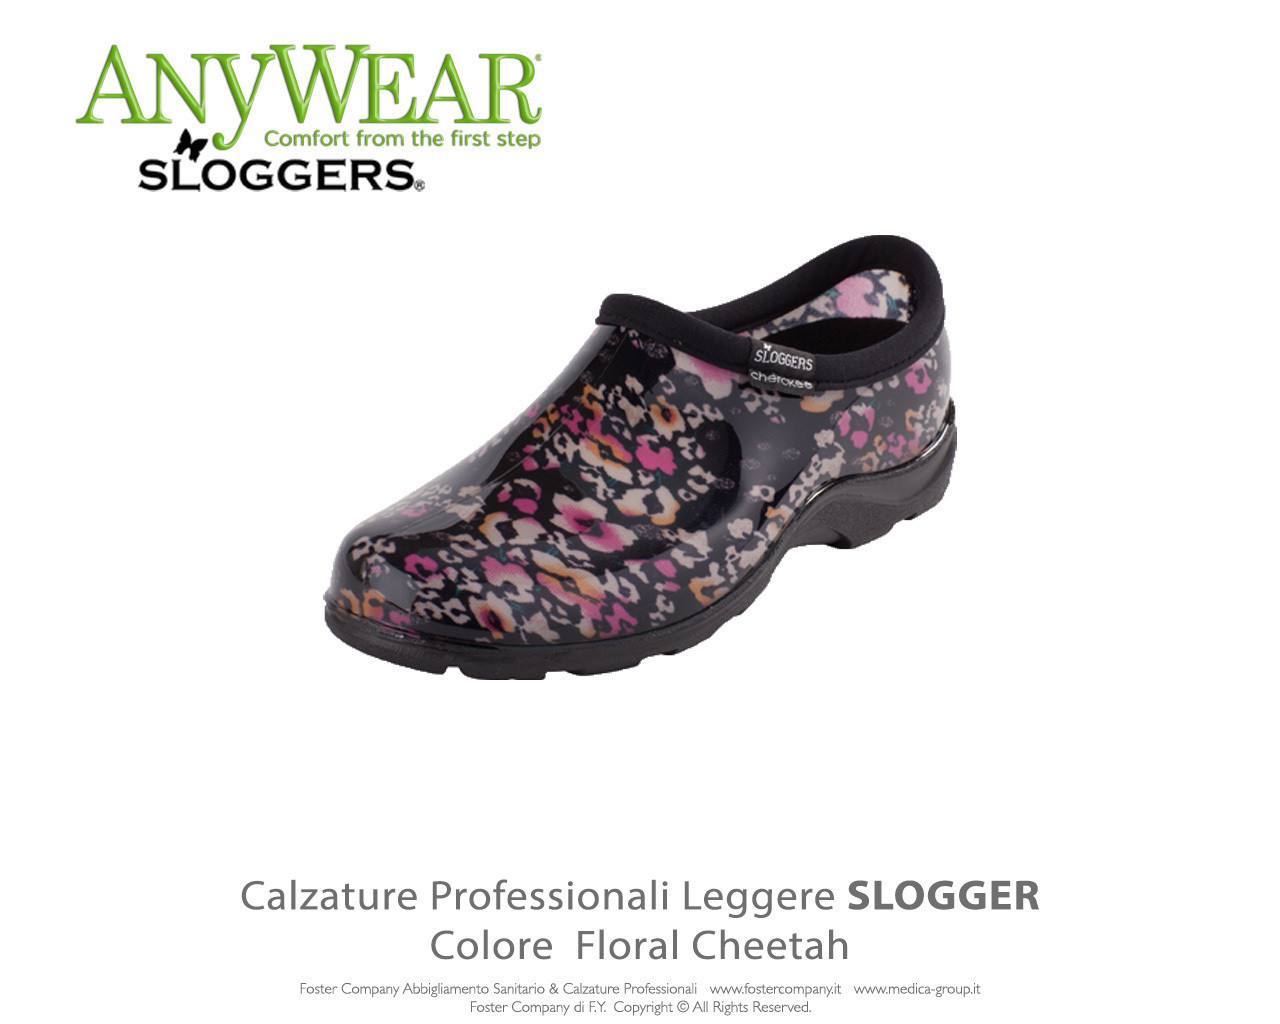 Calzature Professionali Anywear SLOGGER Colore Floral Cheetah - FINE SERIE